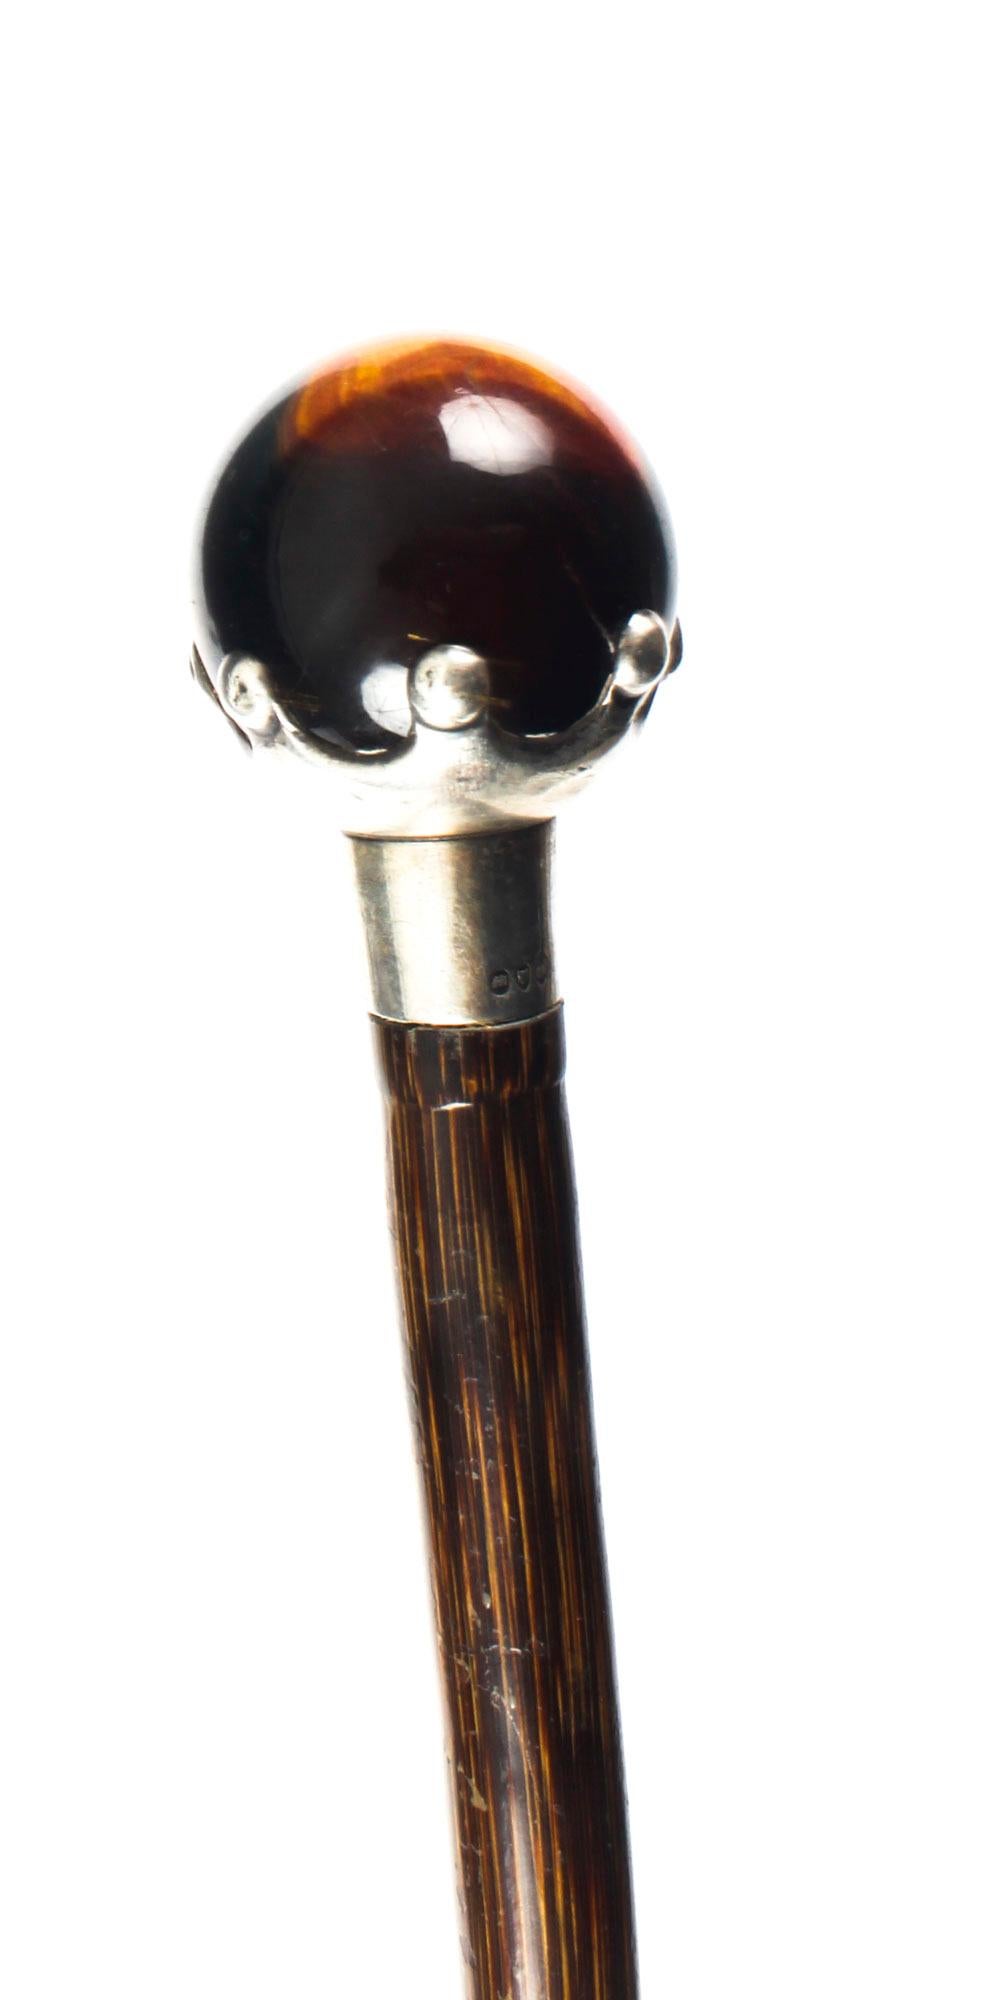 19th century cane